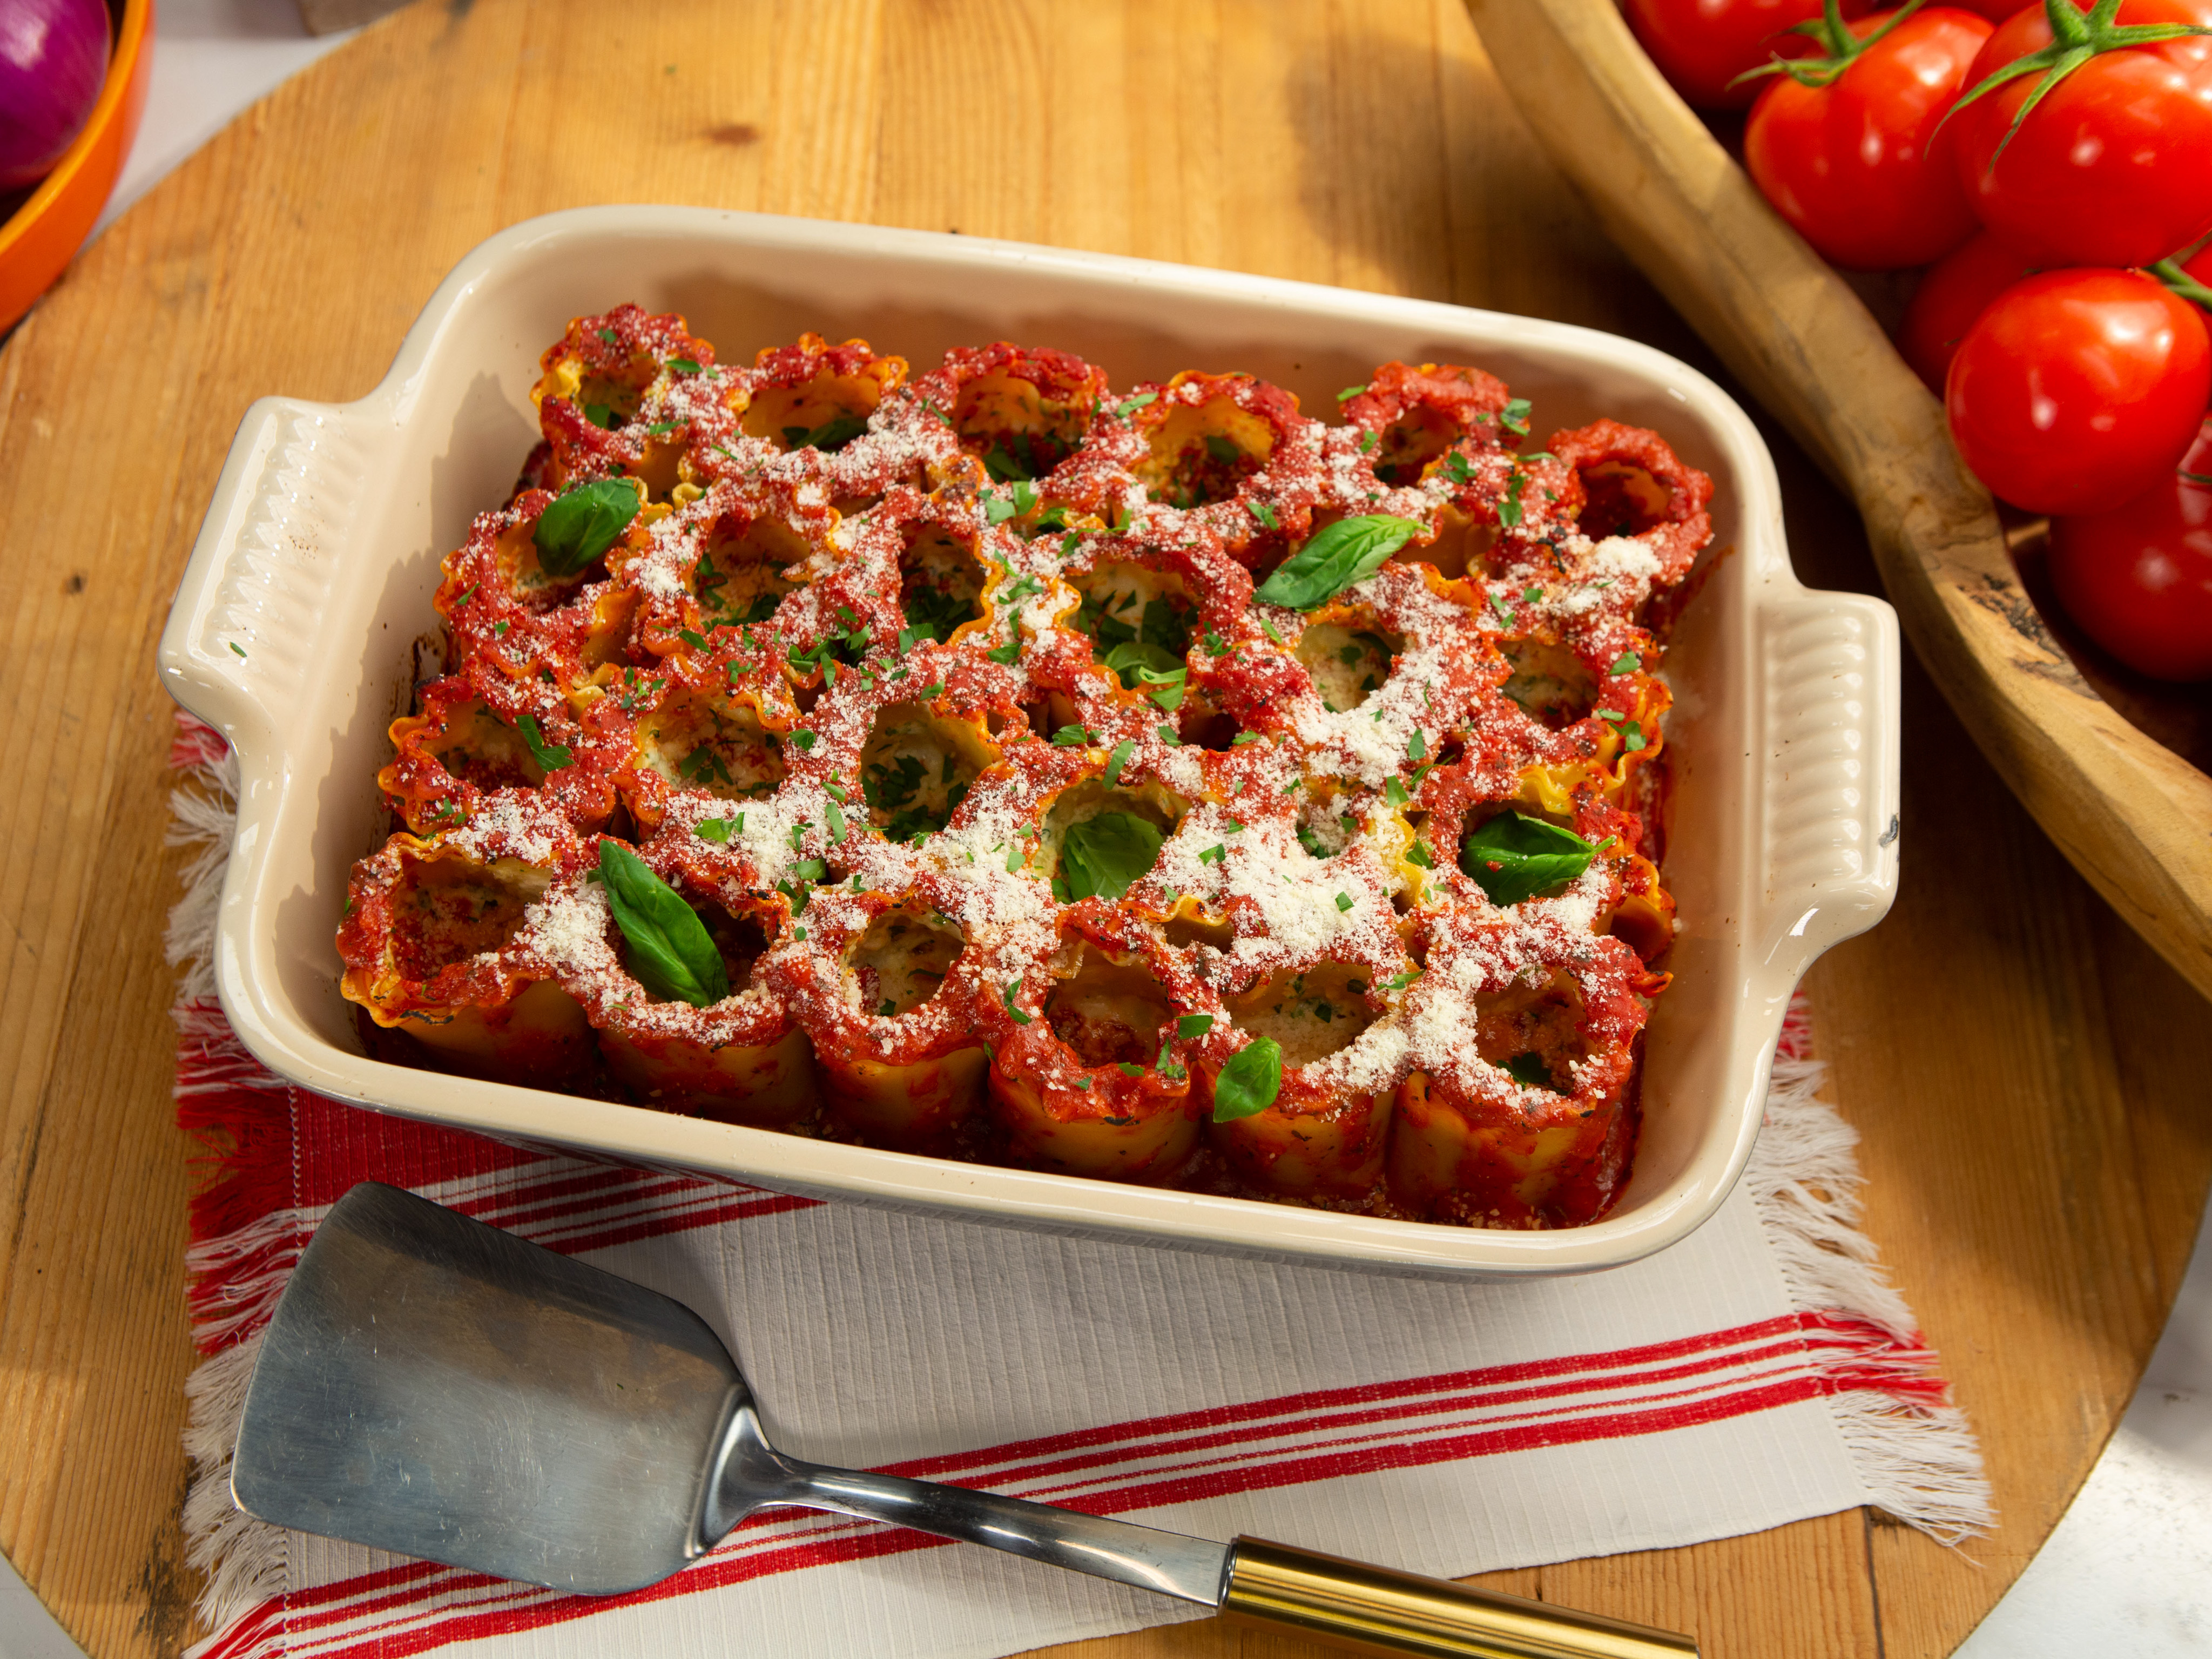 https://www.foodnetwork.com/content/dam/images/food/fullset/2019/6/25/0/KC2110_Sunnys-Easy-Tomato-and-Basil-Lasagna-Roll-Ups_s4x3.jpg